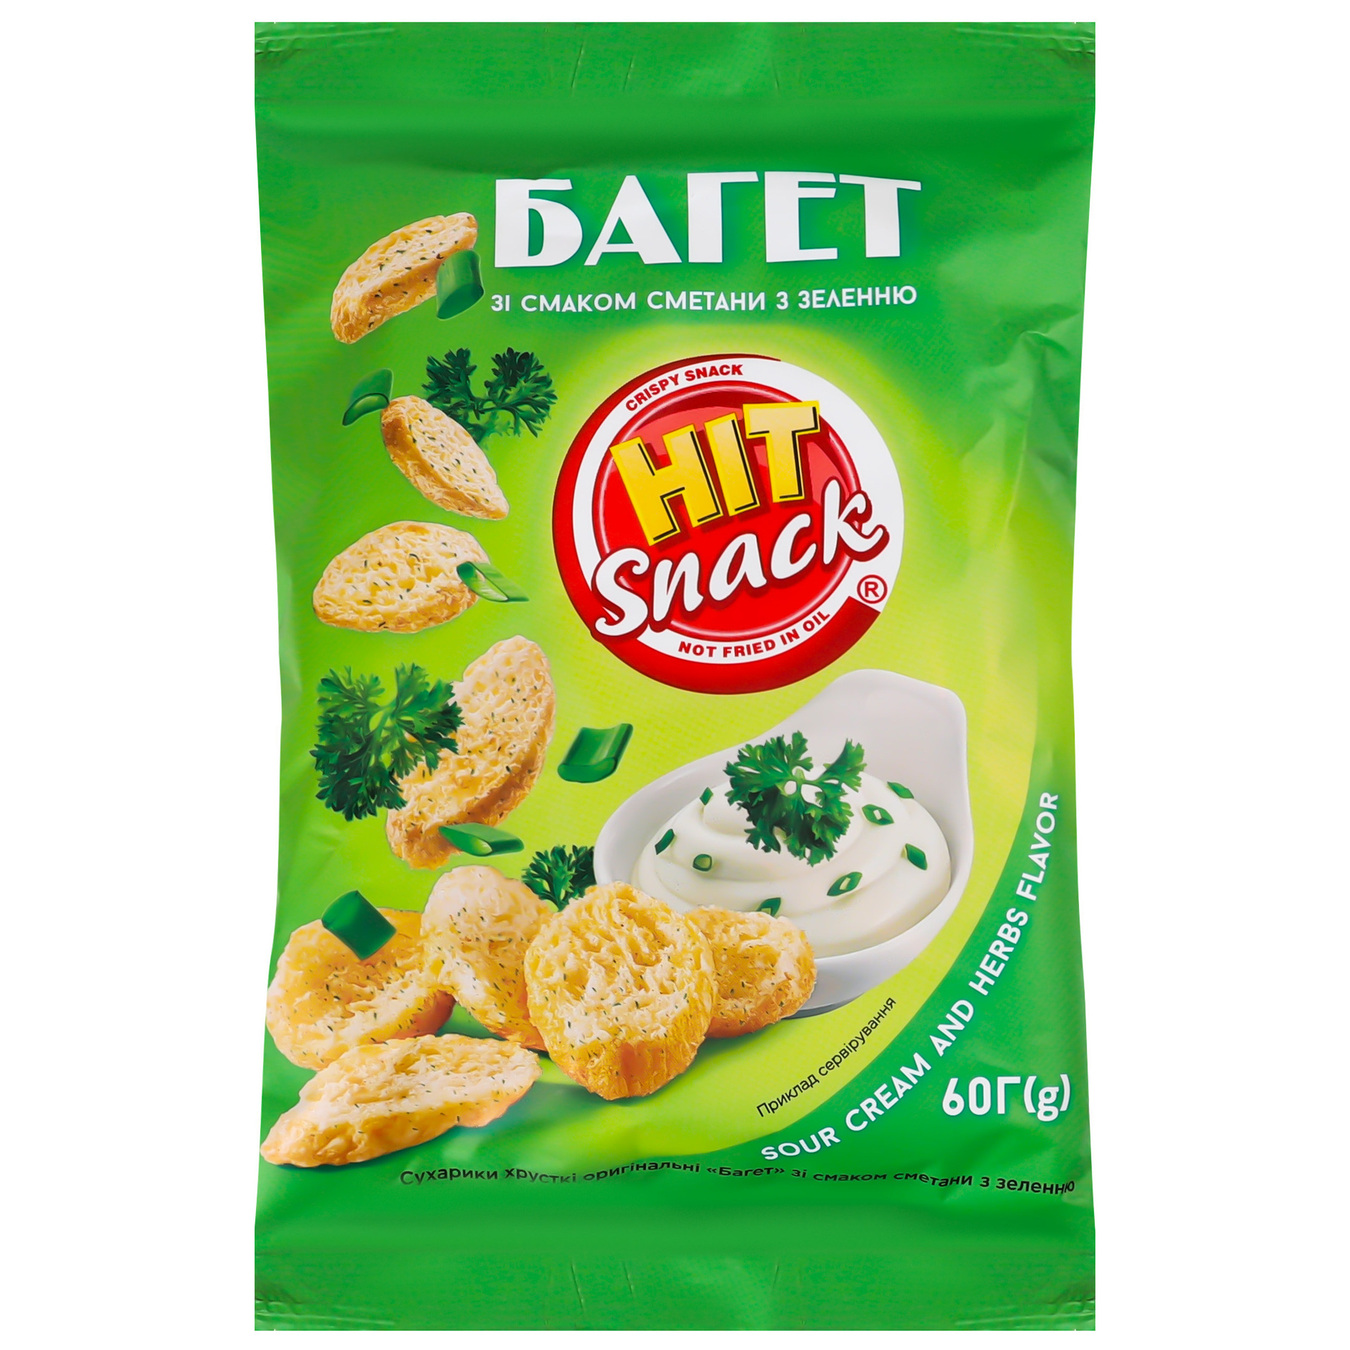 Багет Hit snack вкус сметаны и зелени 60г